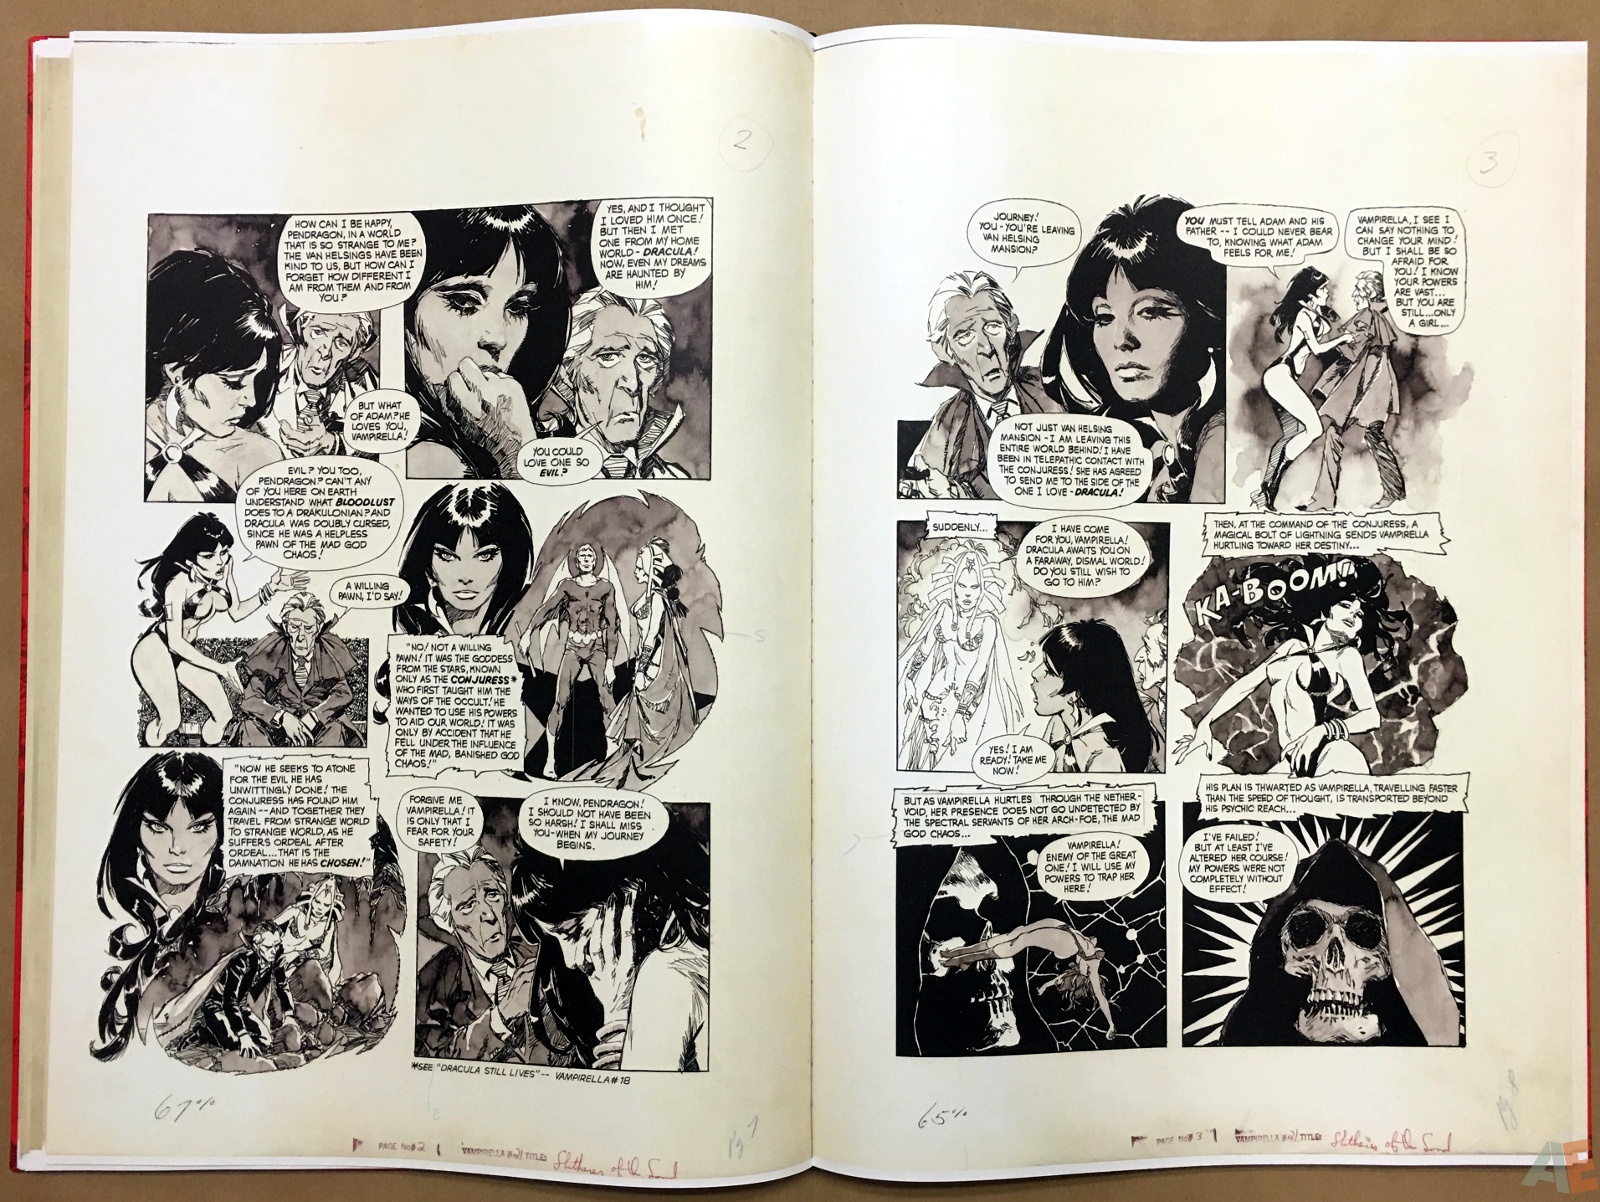 Jose Gonzalez’s Vampirella Art Edition Vol 1